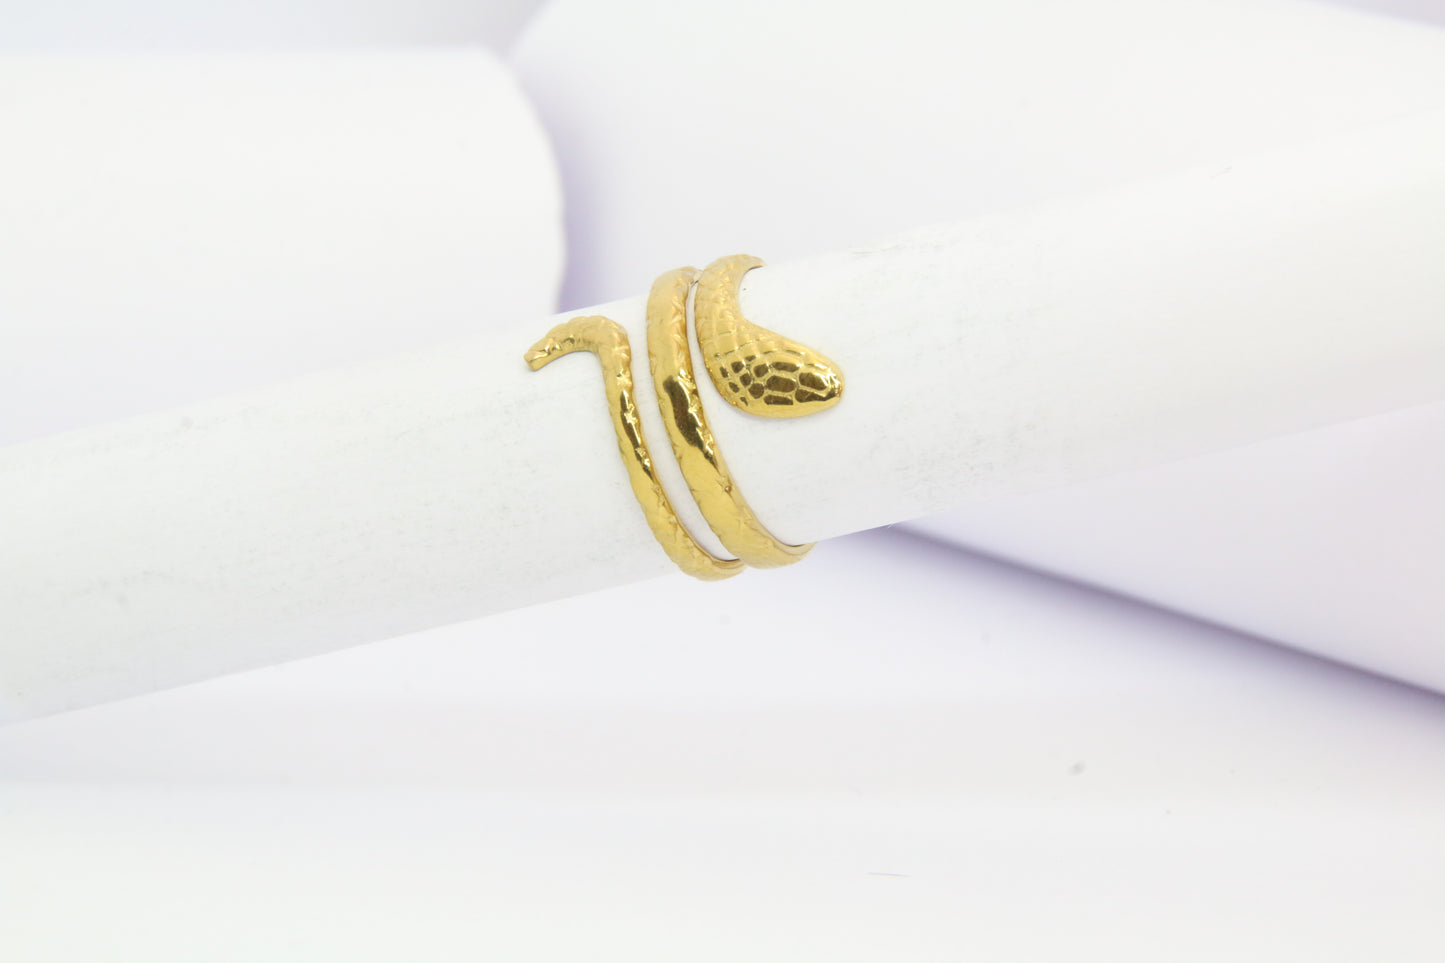 Bague dorée ajustable en forme de serpent en acier inoxydable